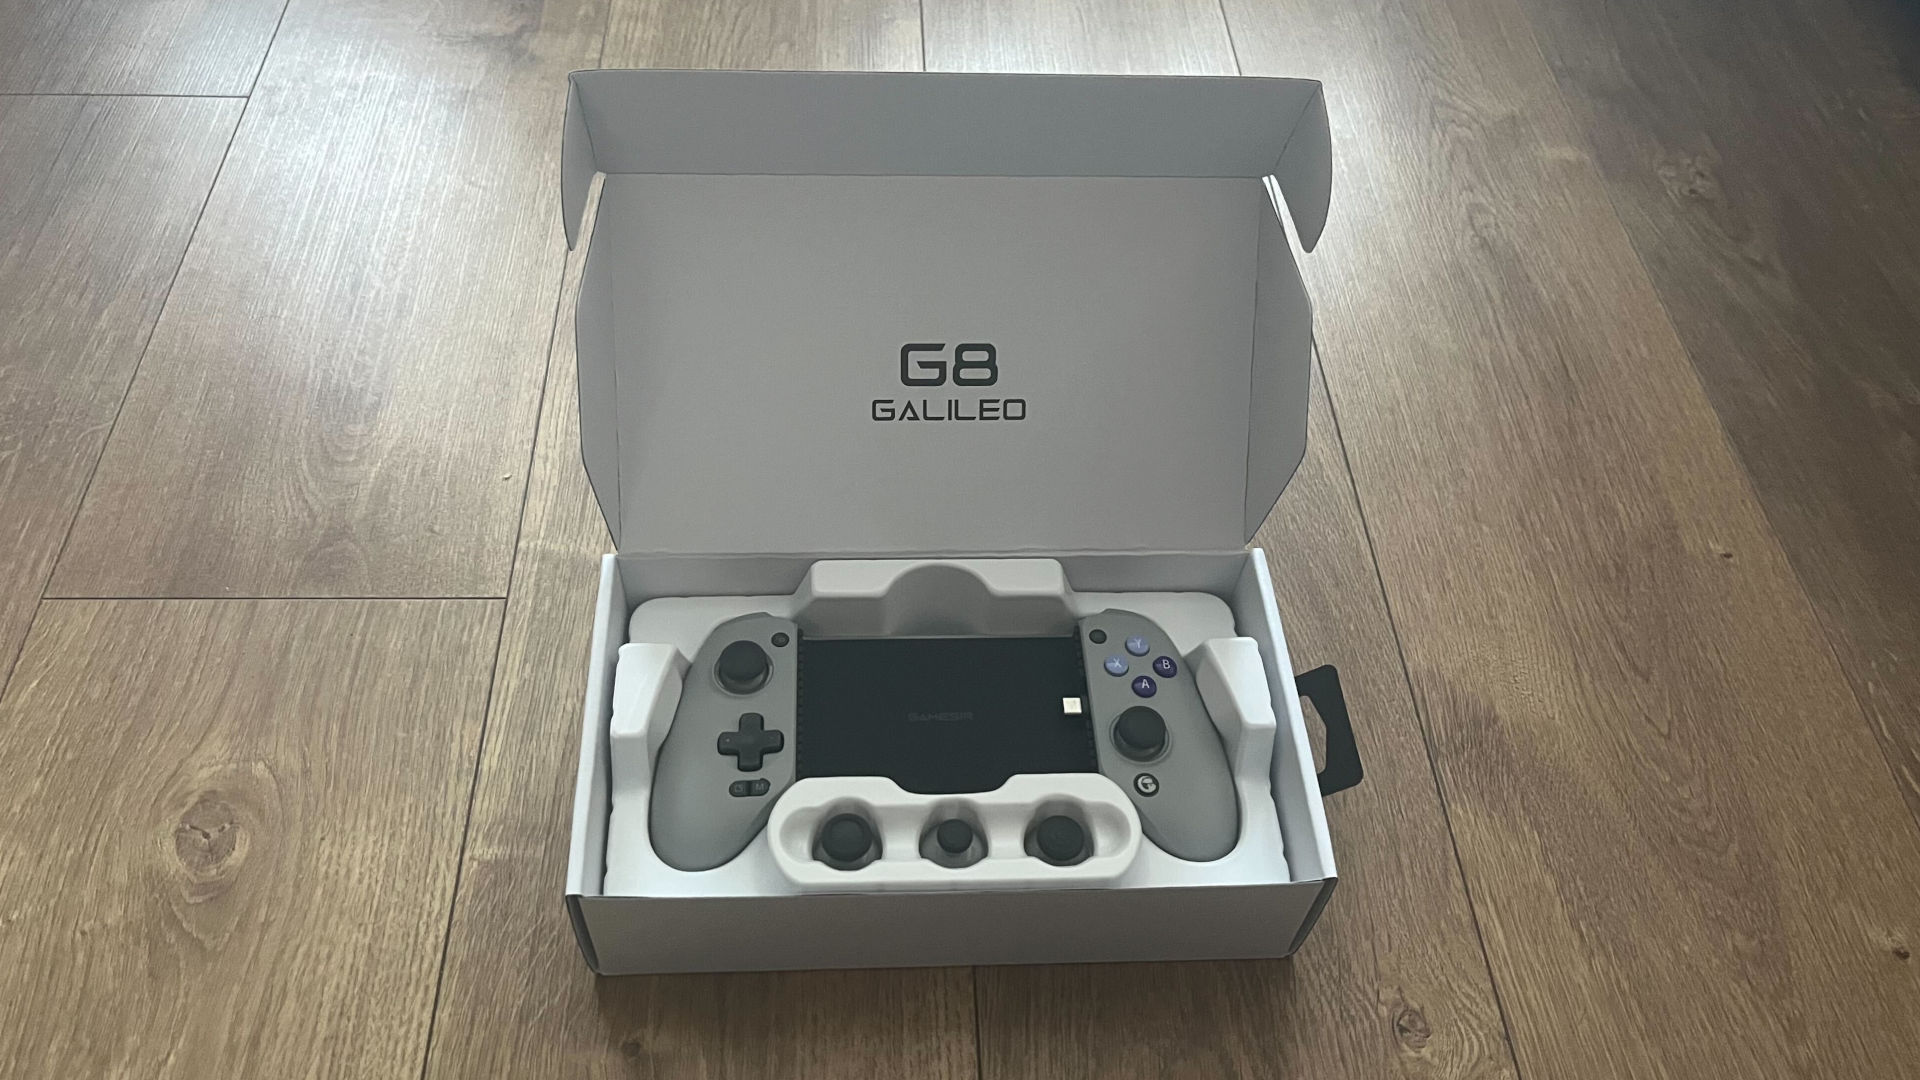 GameSir G8 Galileo Controller Review - Controller Nerds